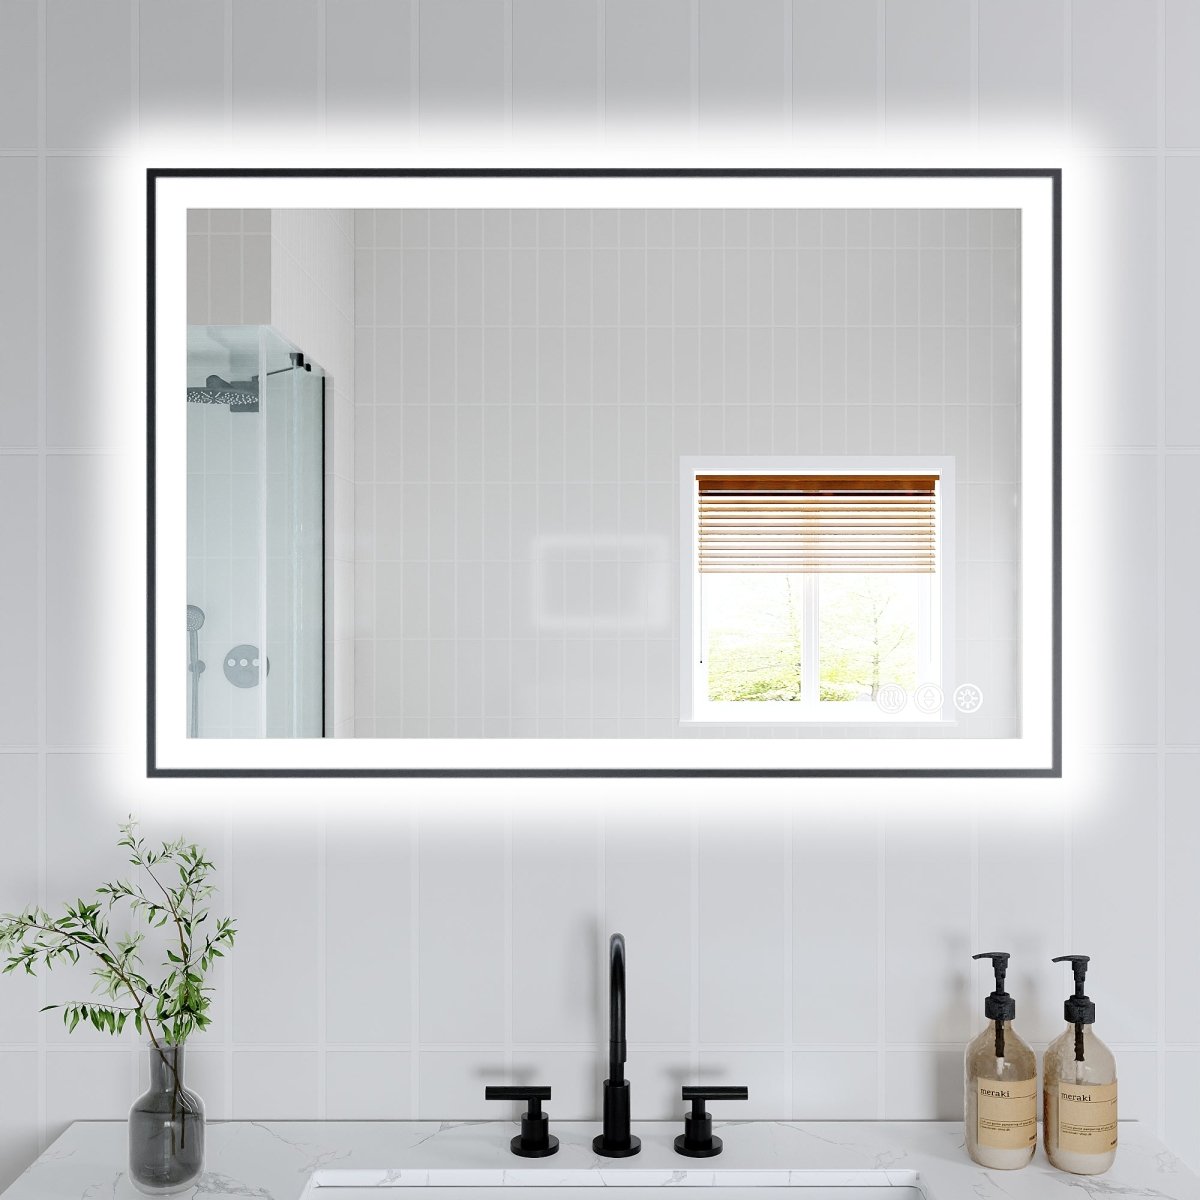 Apex-Noir 24"x36" Framed LED Lighted Bathroom Mirror